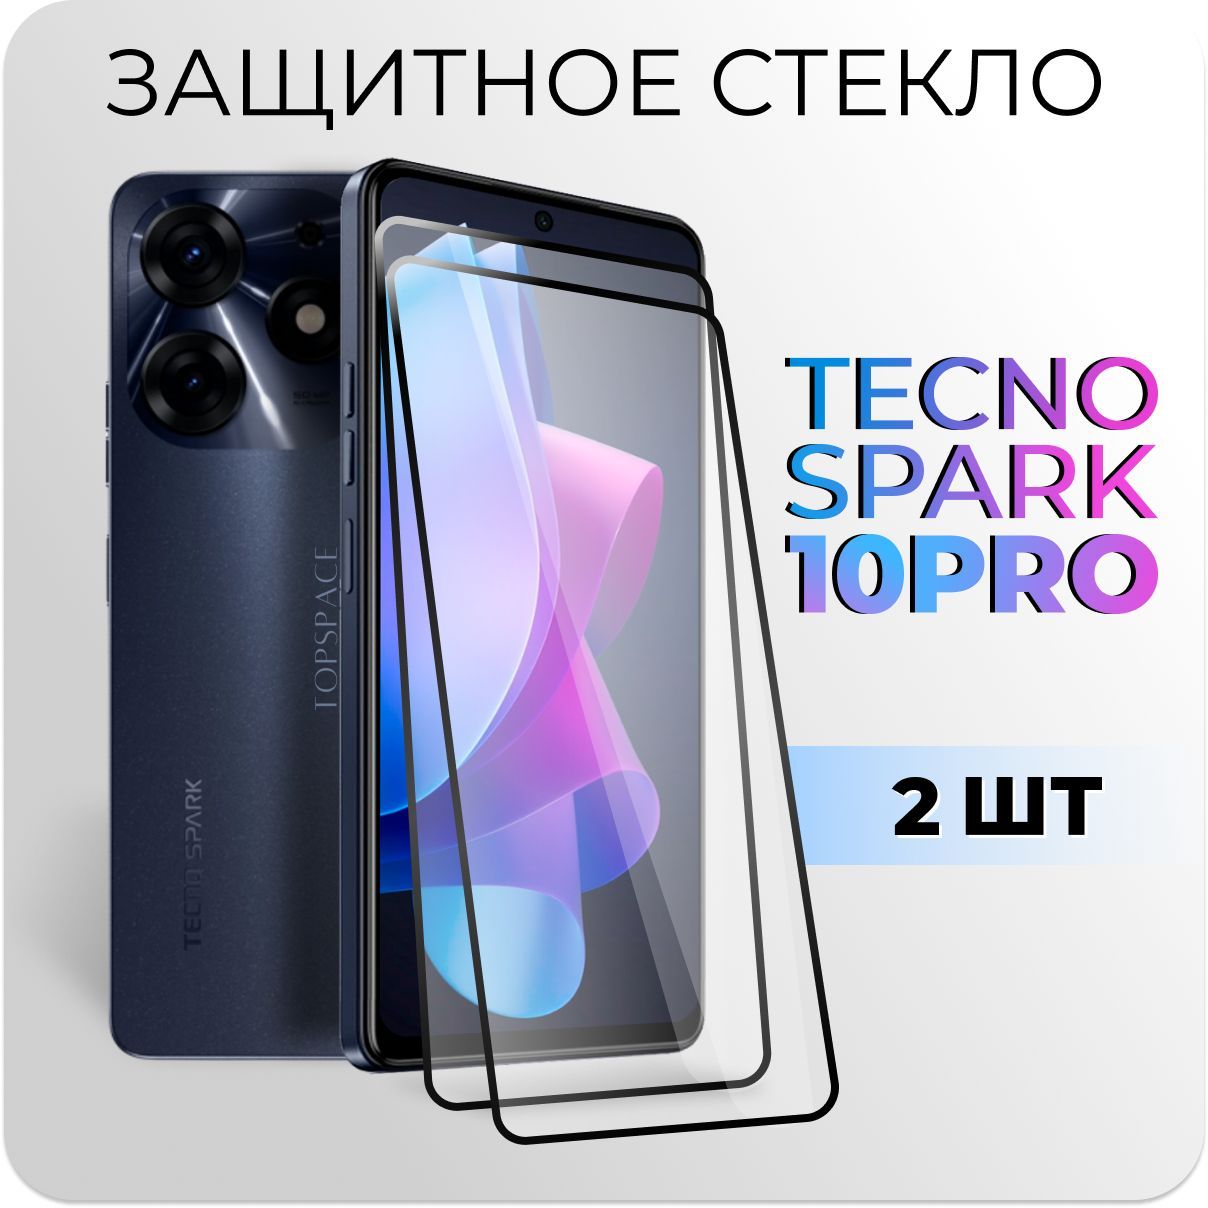 Spark 10 Pro. Телефон техно спарк 2